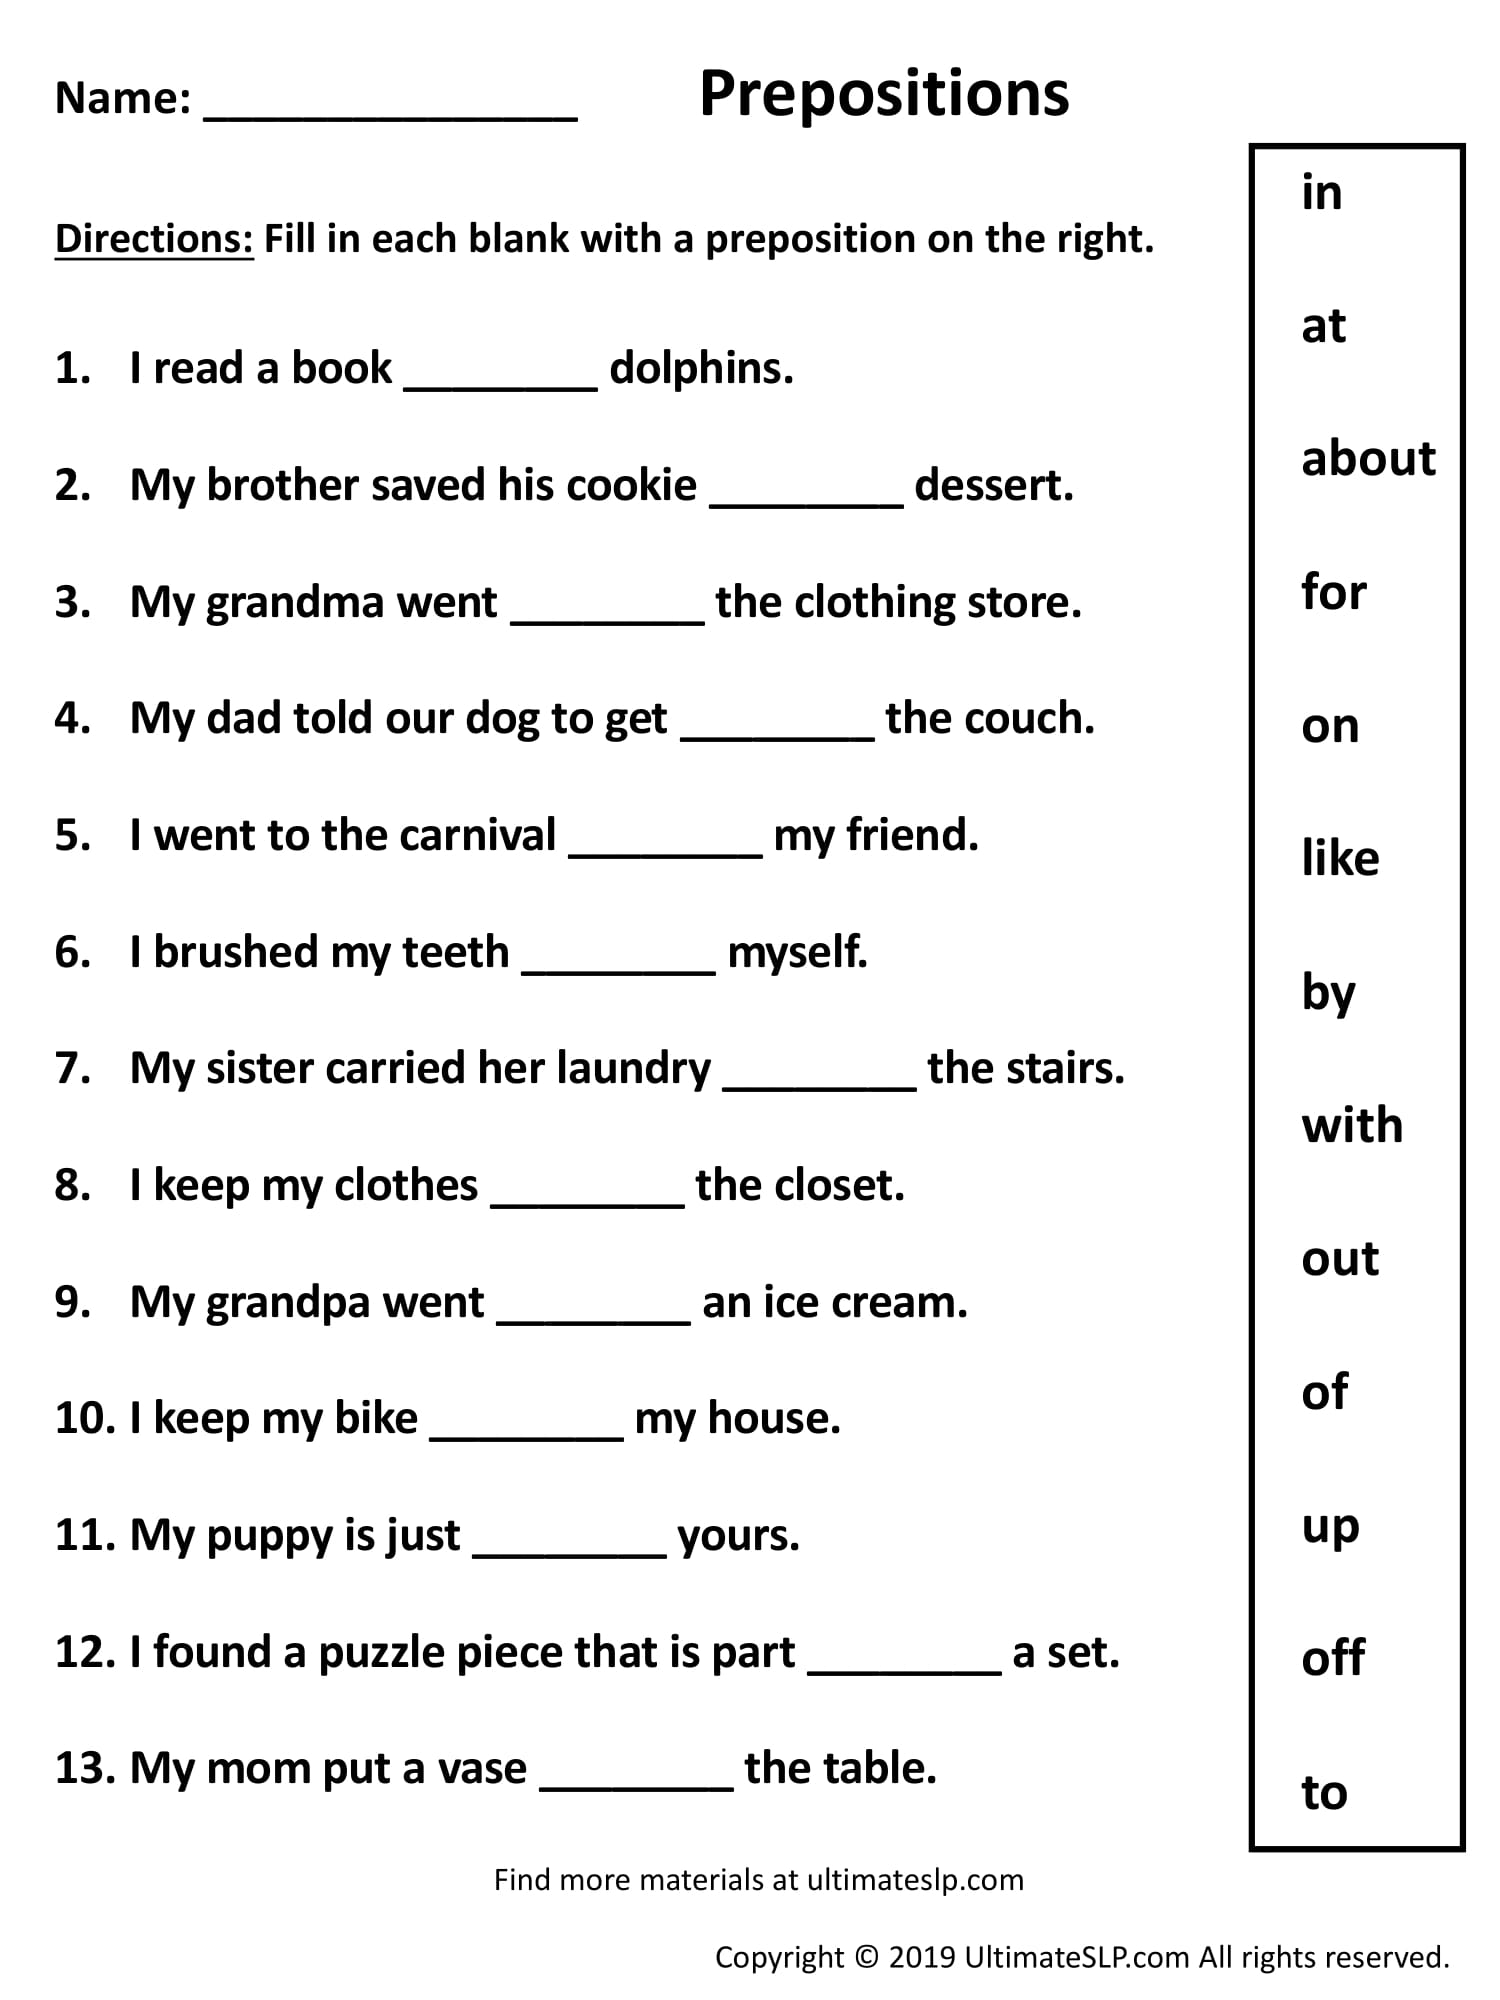 Preposition Sentence Worksheet Answers